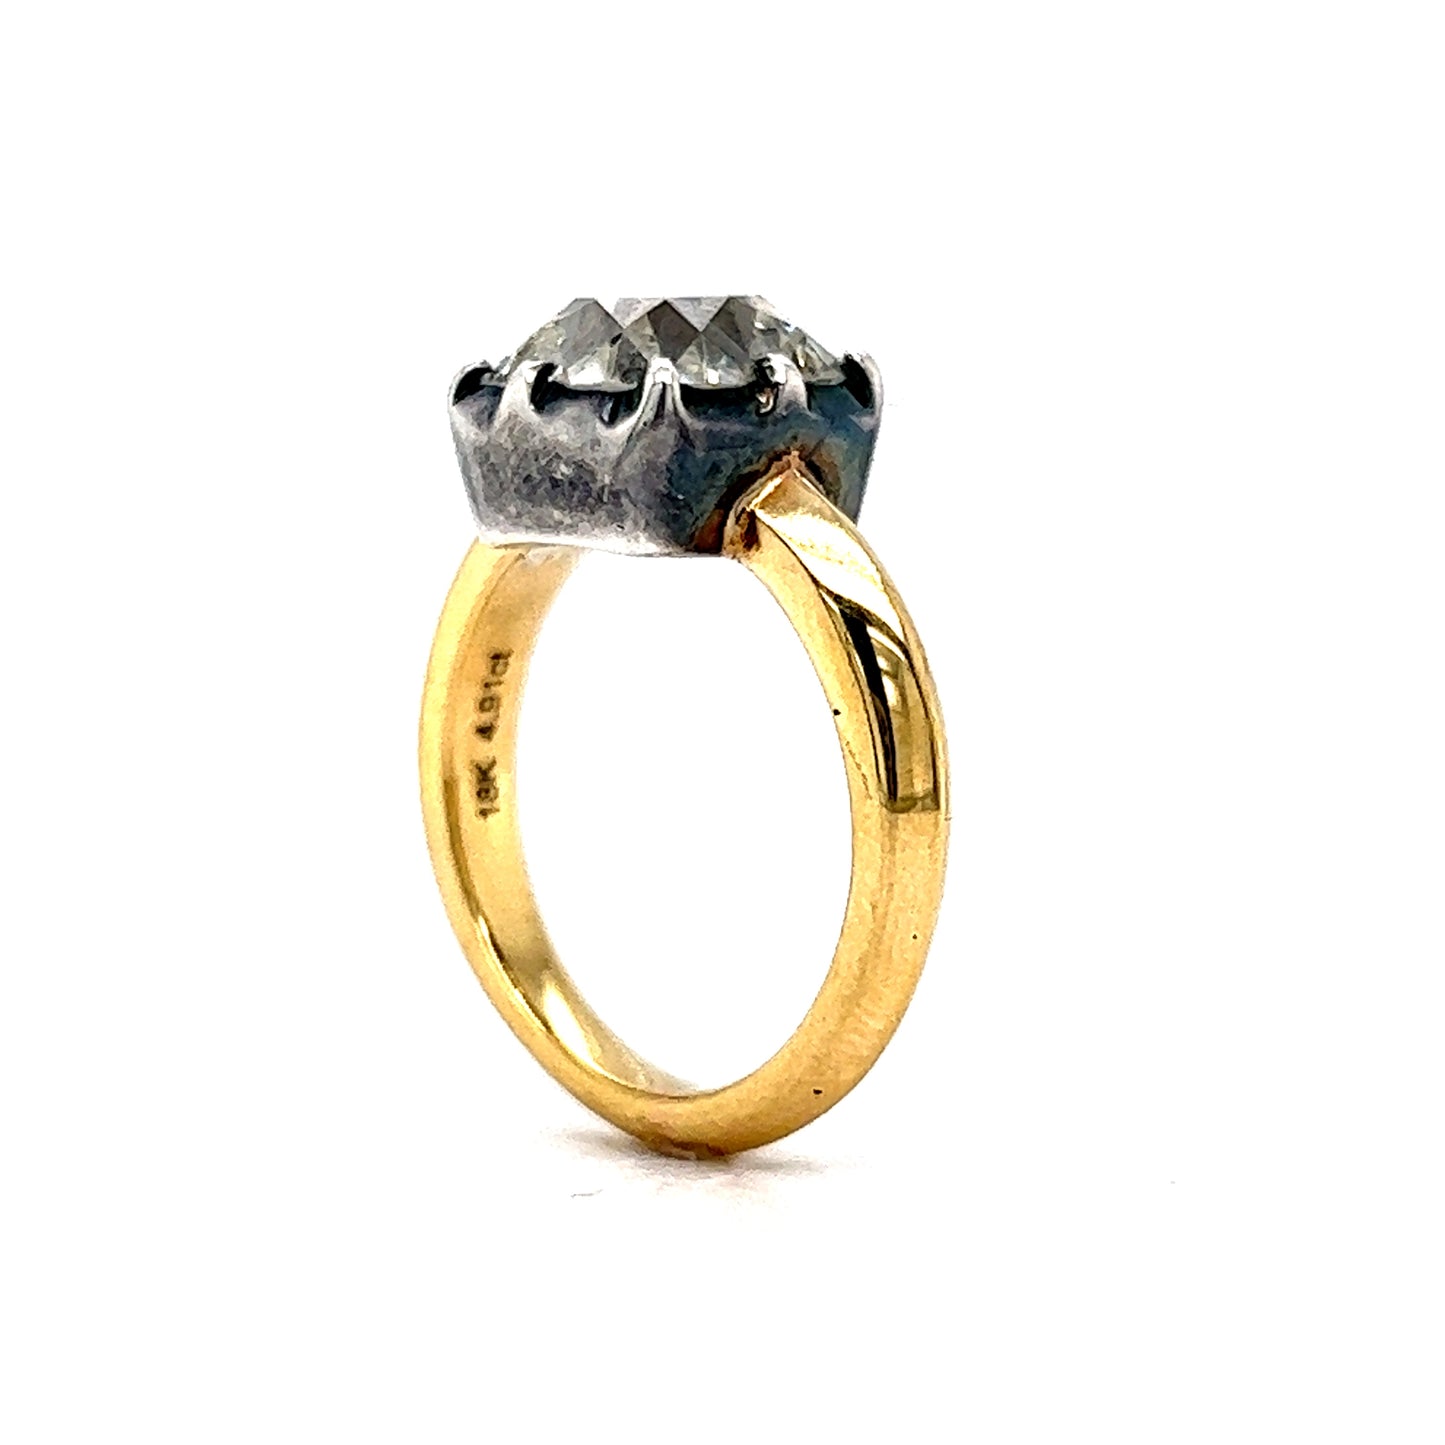 4.91 Old Mine Brilliant Cut Diamond Engagement Ring in 18k